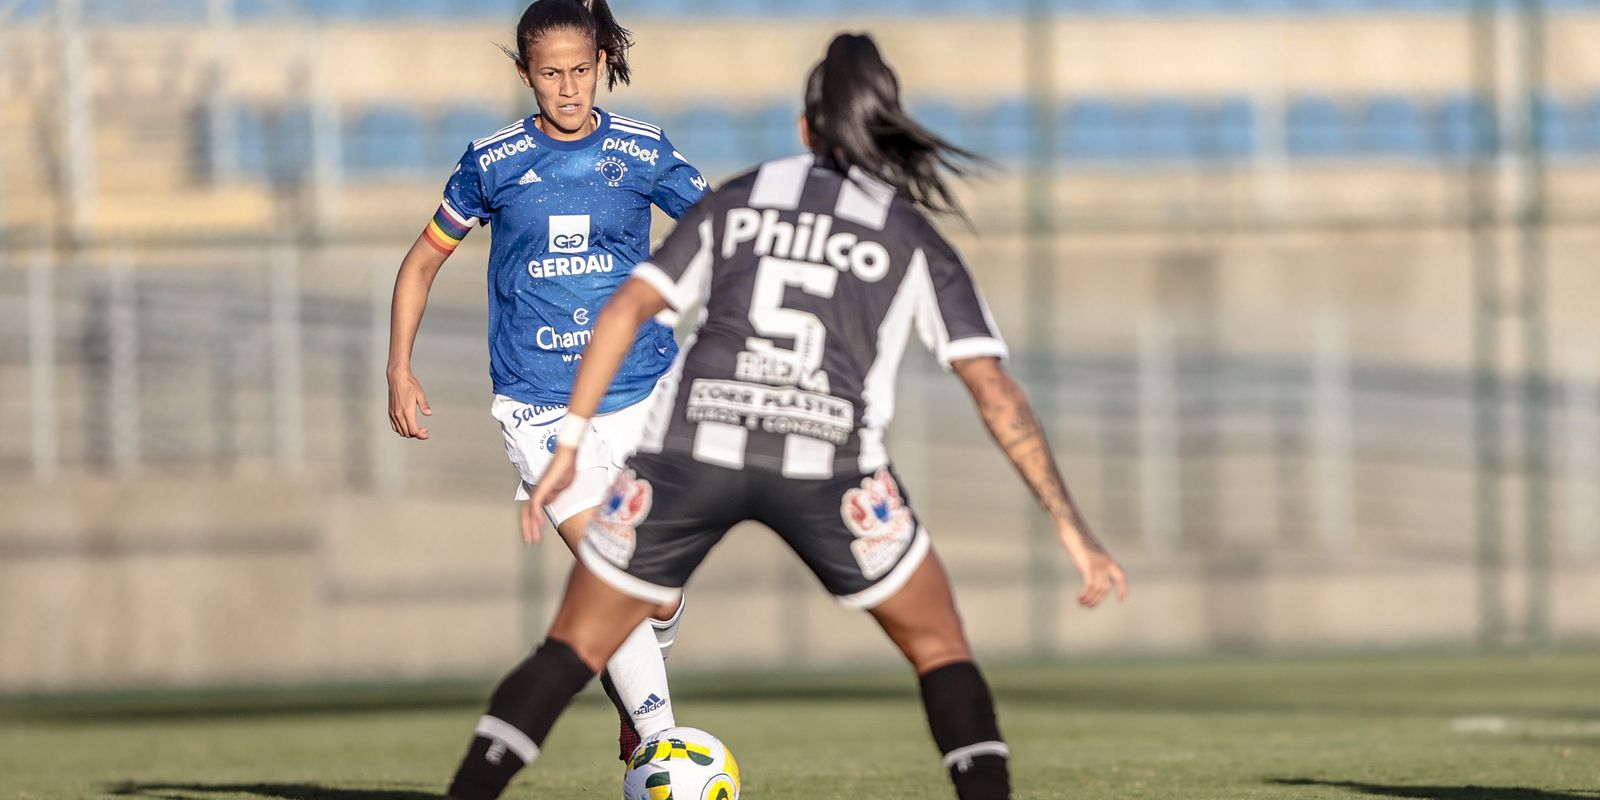 Cruzeiro defeats Santos 4-2 in the Brazilian Women's Championship